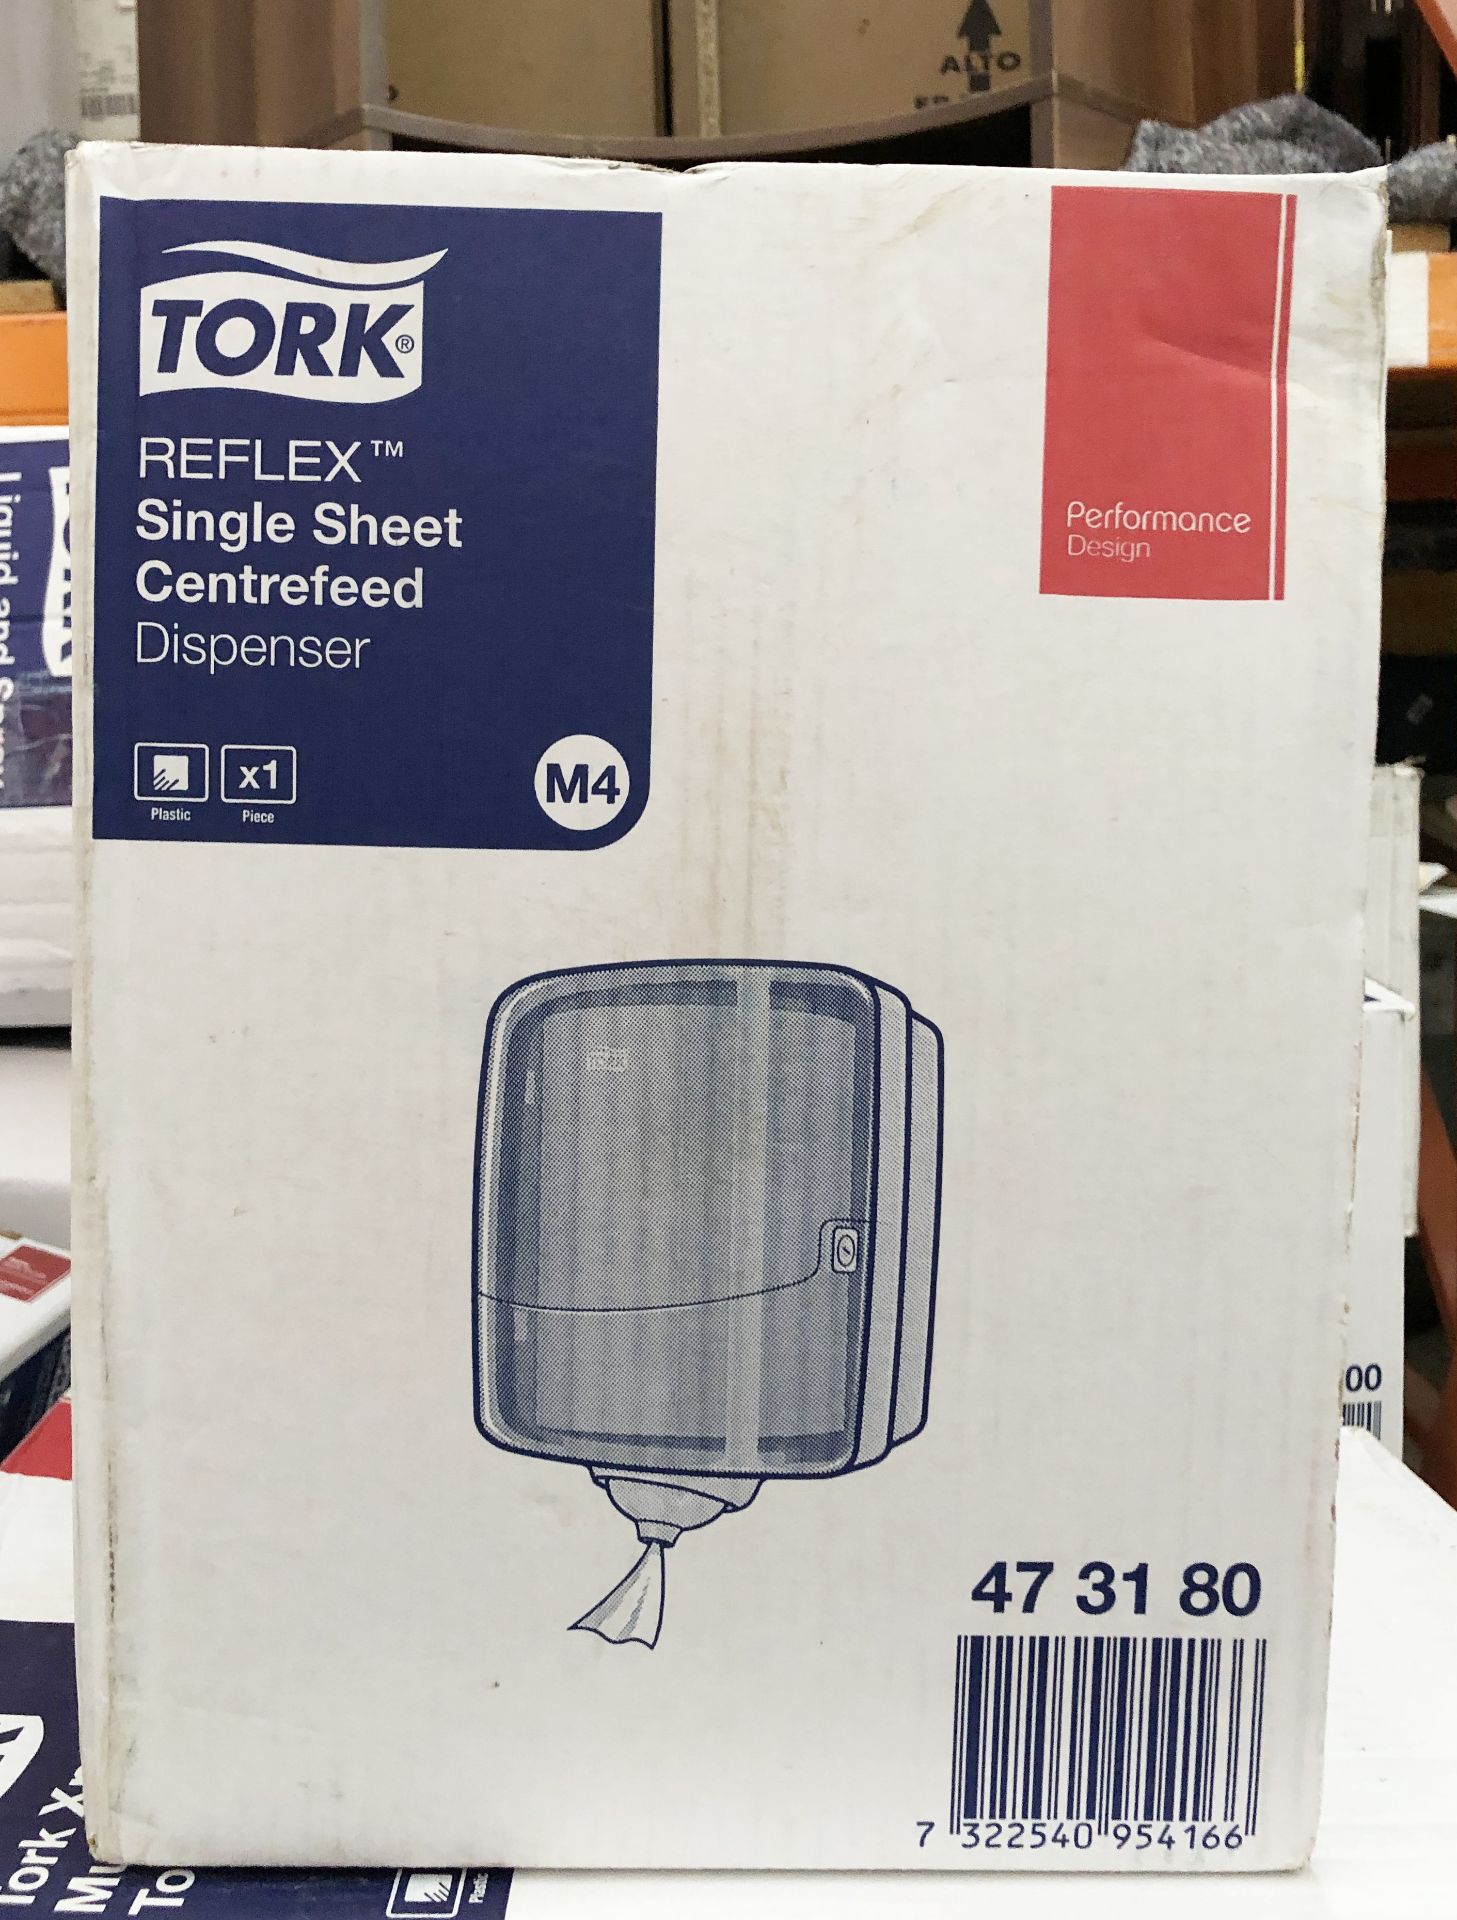 2 x TORK Single Sheet Centre Dispenser - Ref: 47 31 80 - CL329 - Total RRP £72.00 - Image 3 of 4